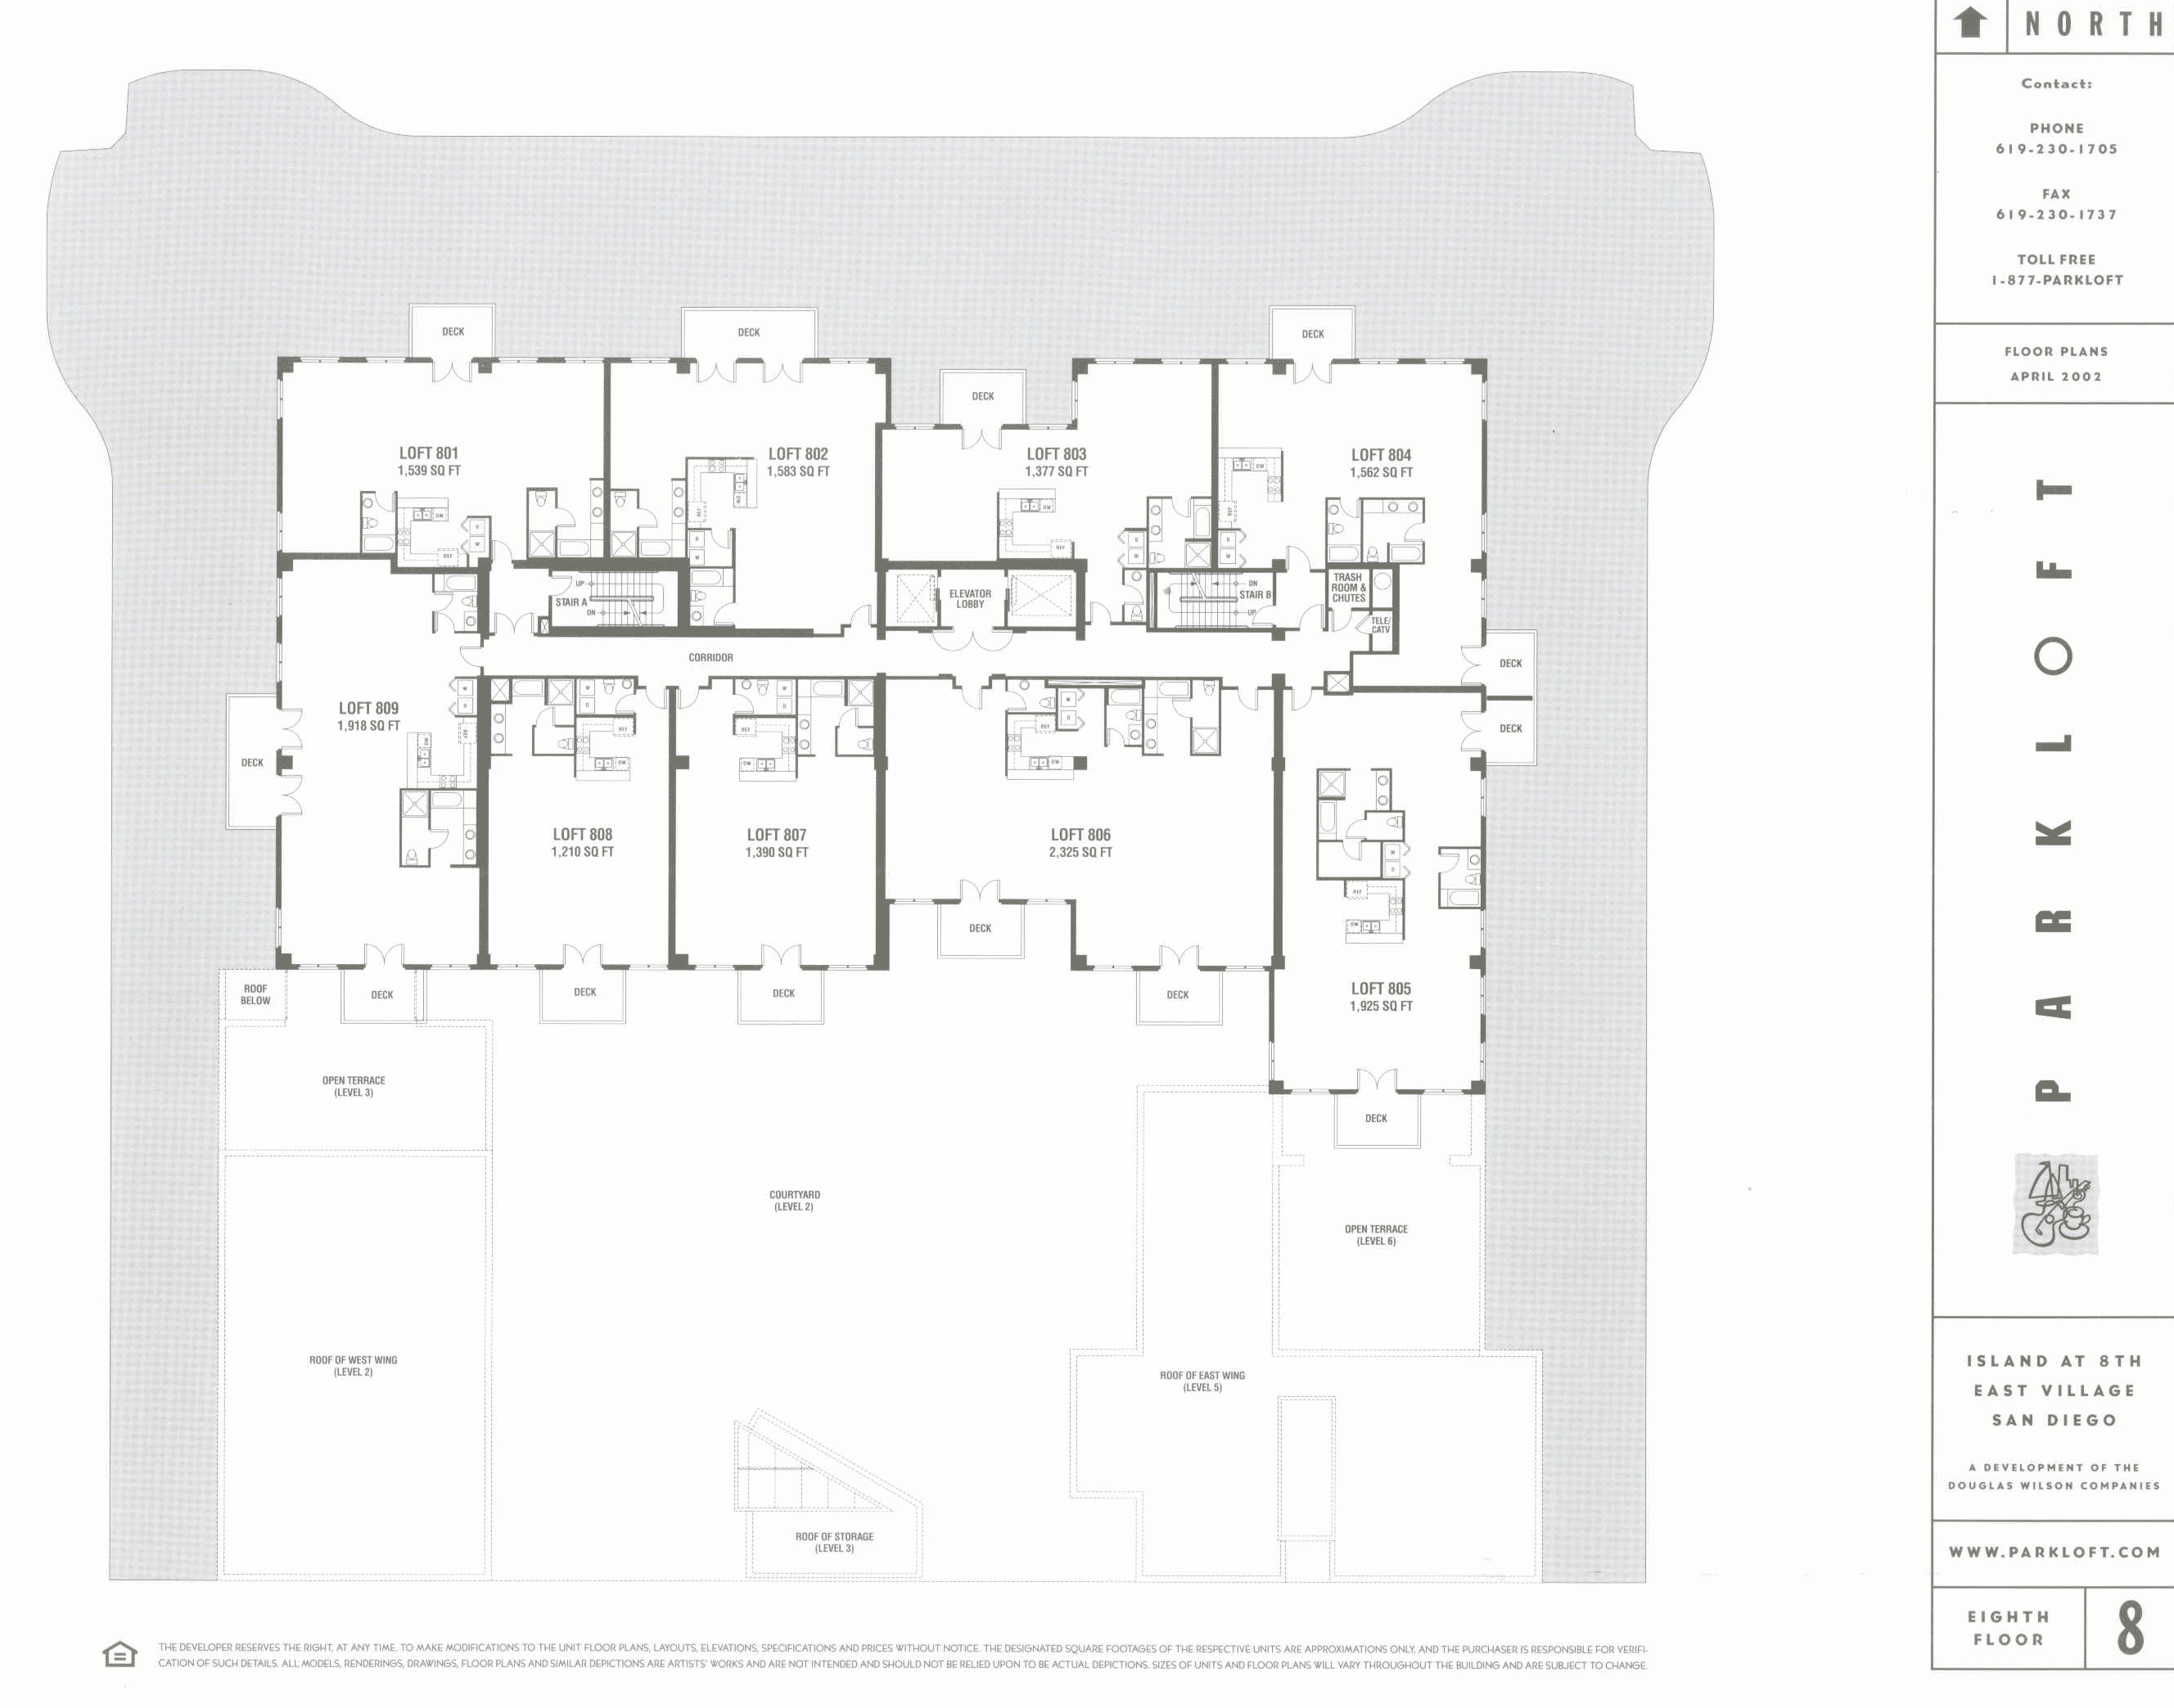 Parkloft Floor Plan 8th Floor